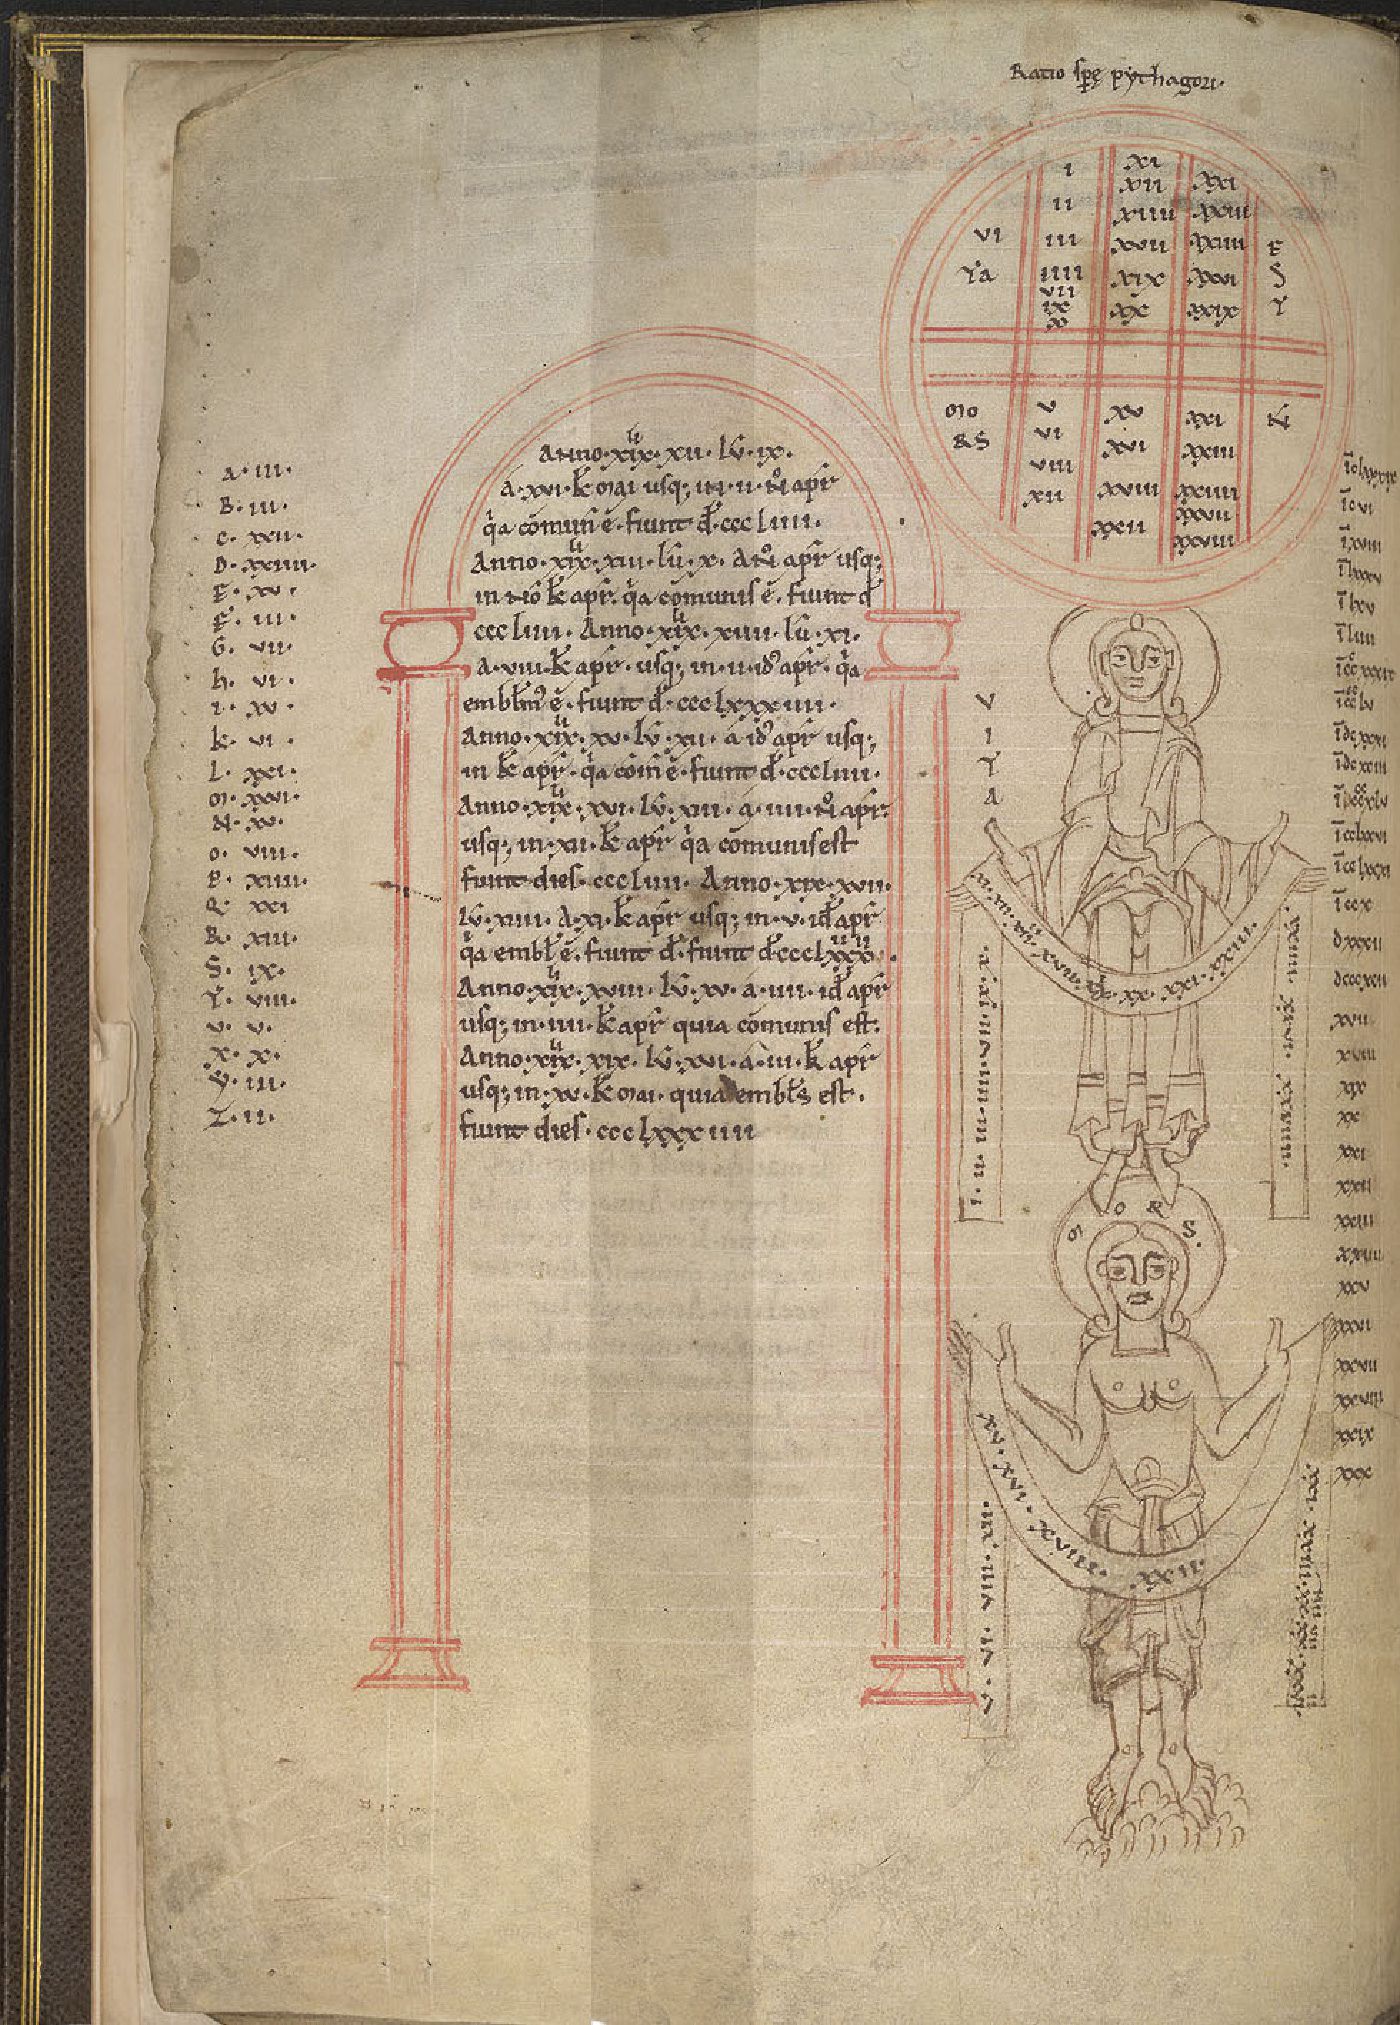 Illuminated manuscript from the British Library